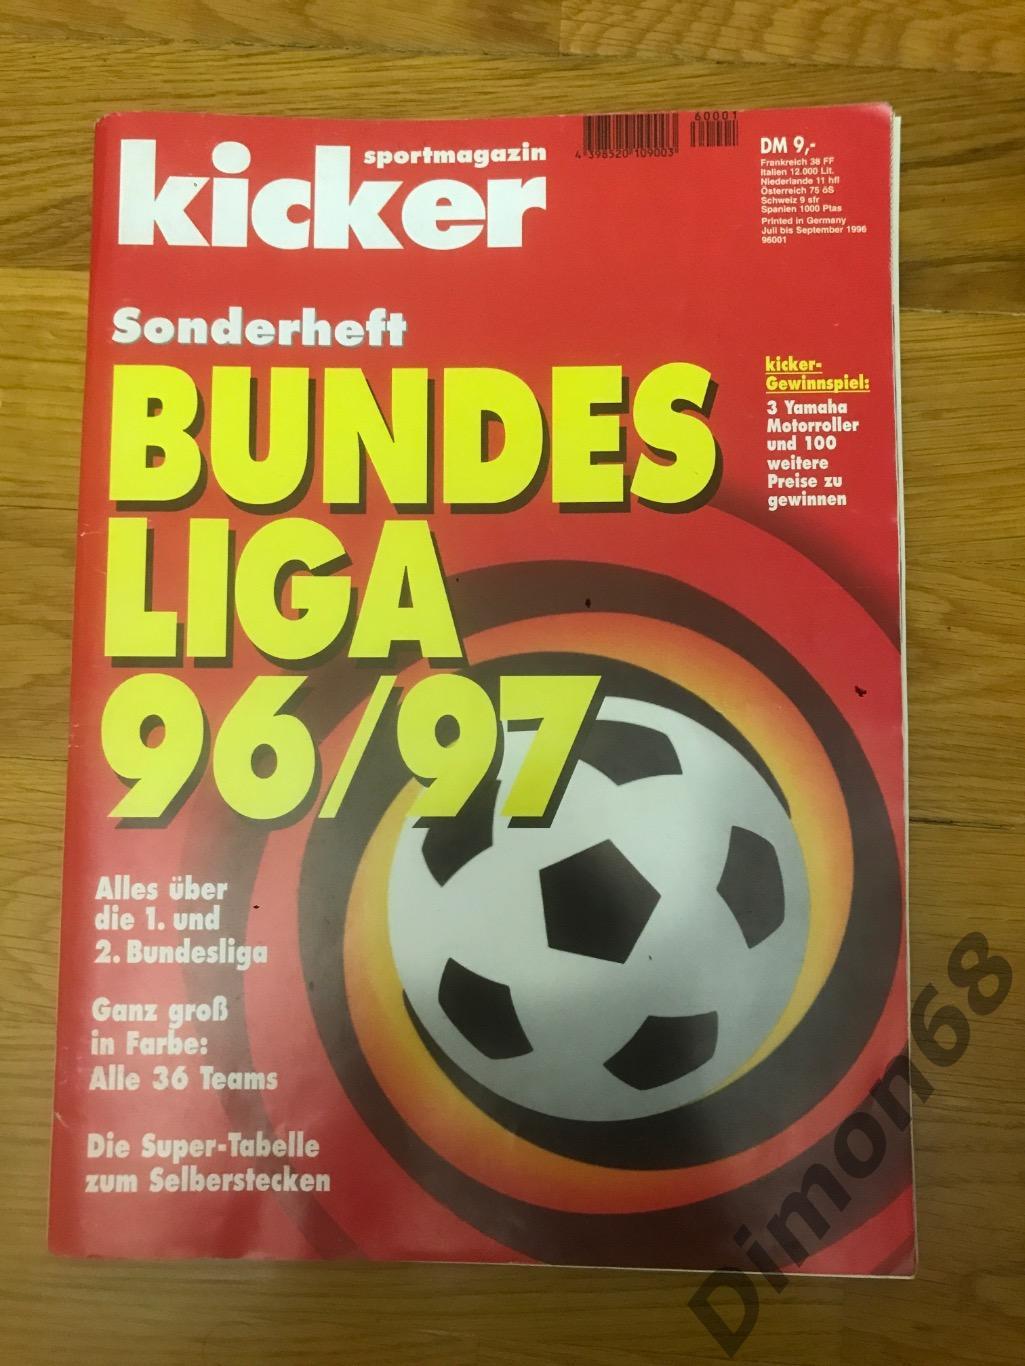 kicker bundesliga 96/97 не целый